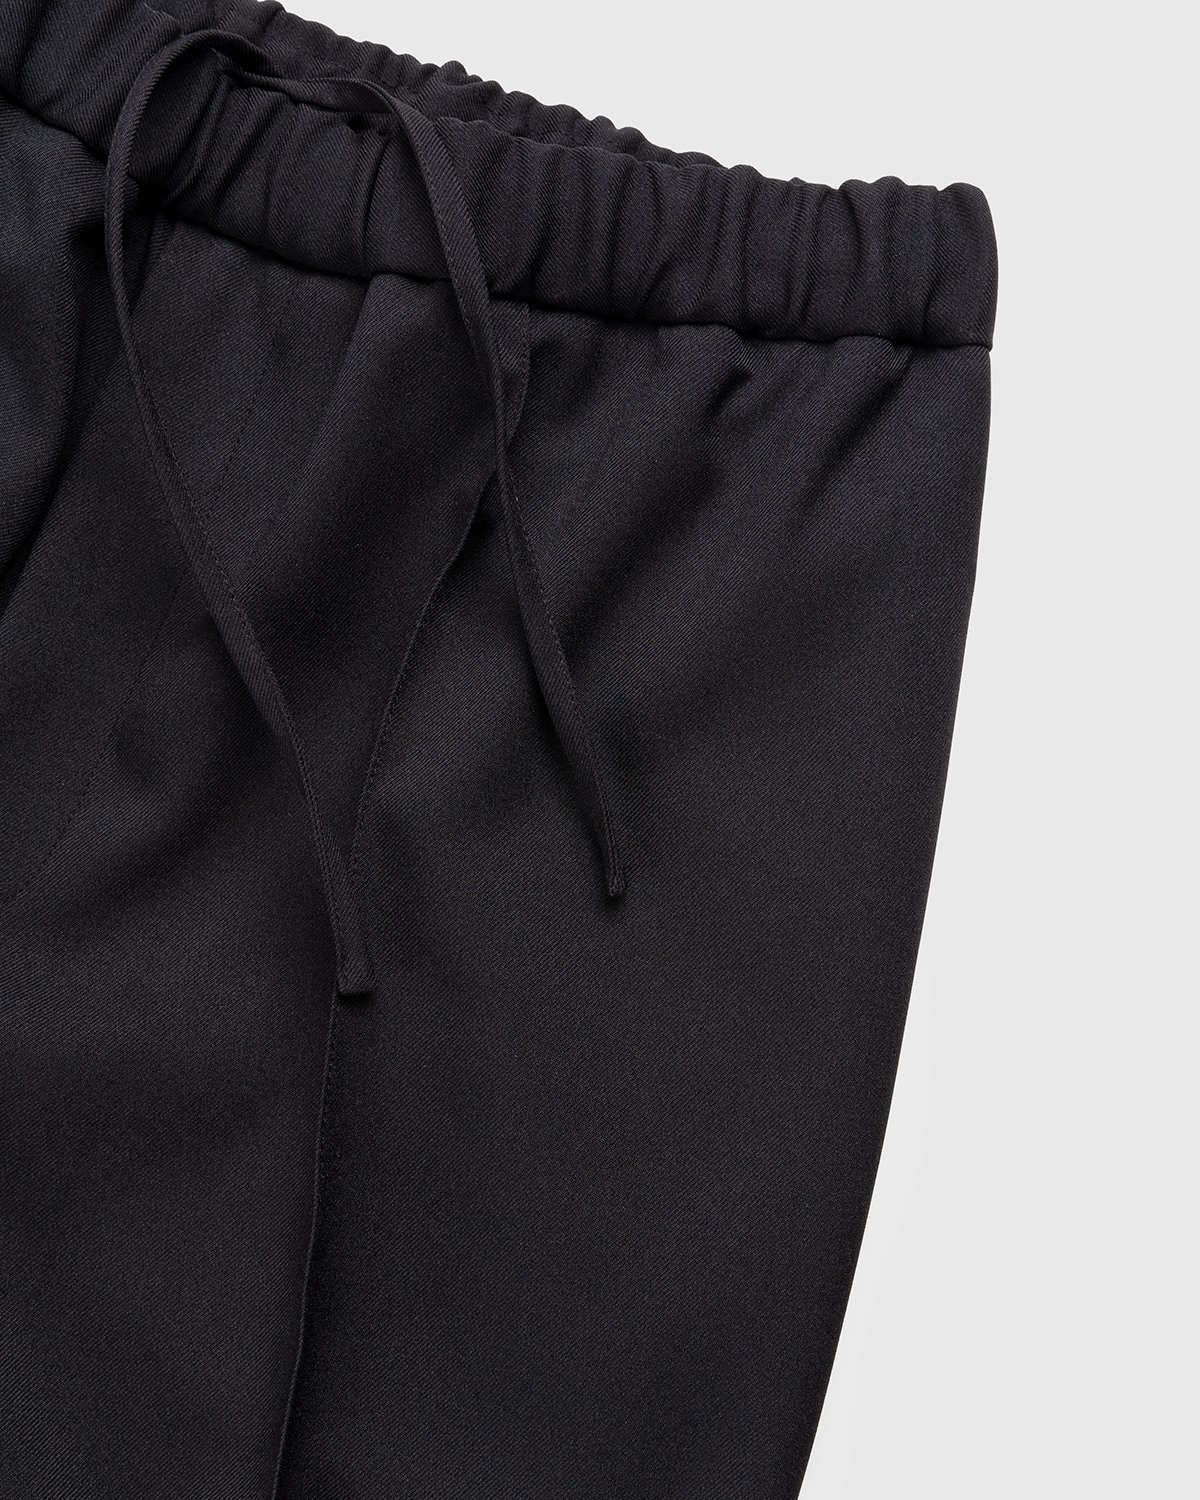 Jil Sander - Trouser D 09 AW 20 Black - Clothing - Black - Image 6